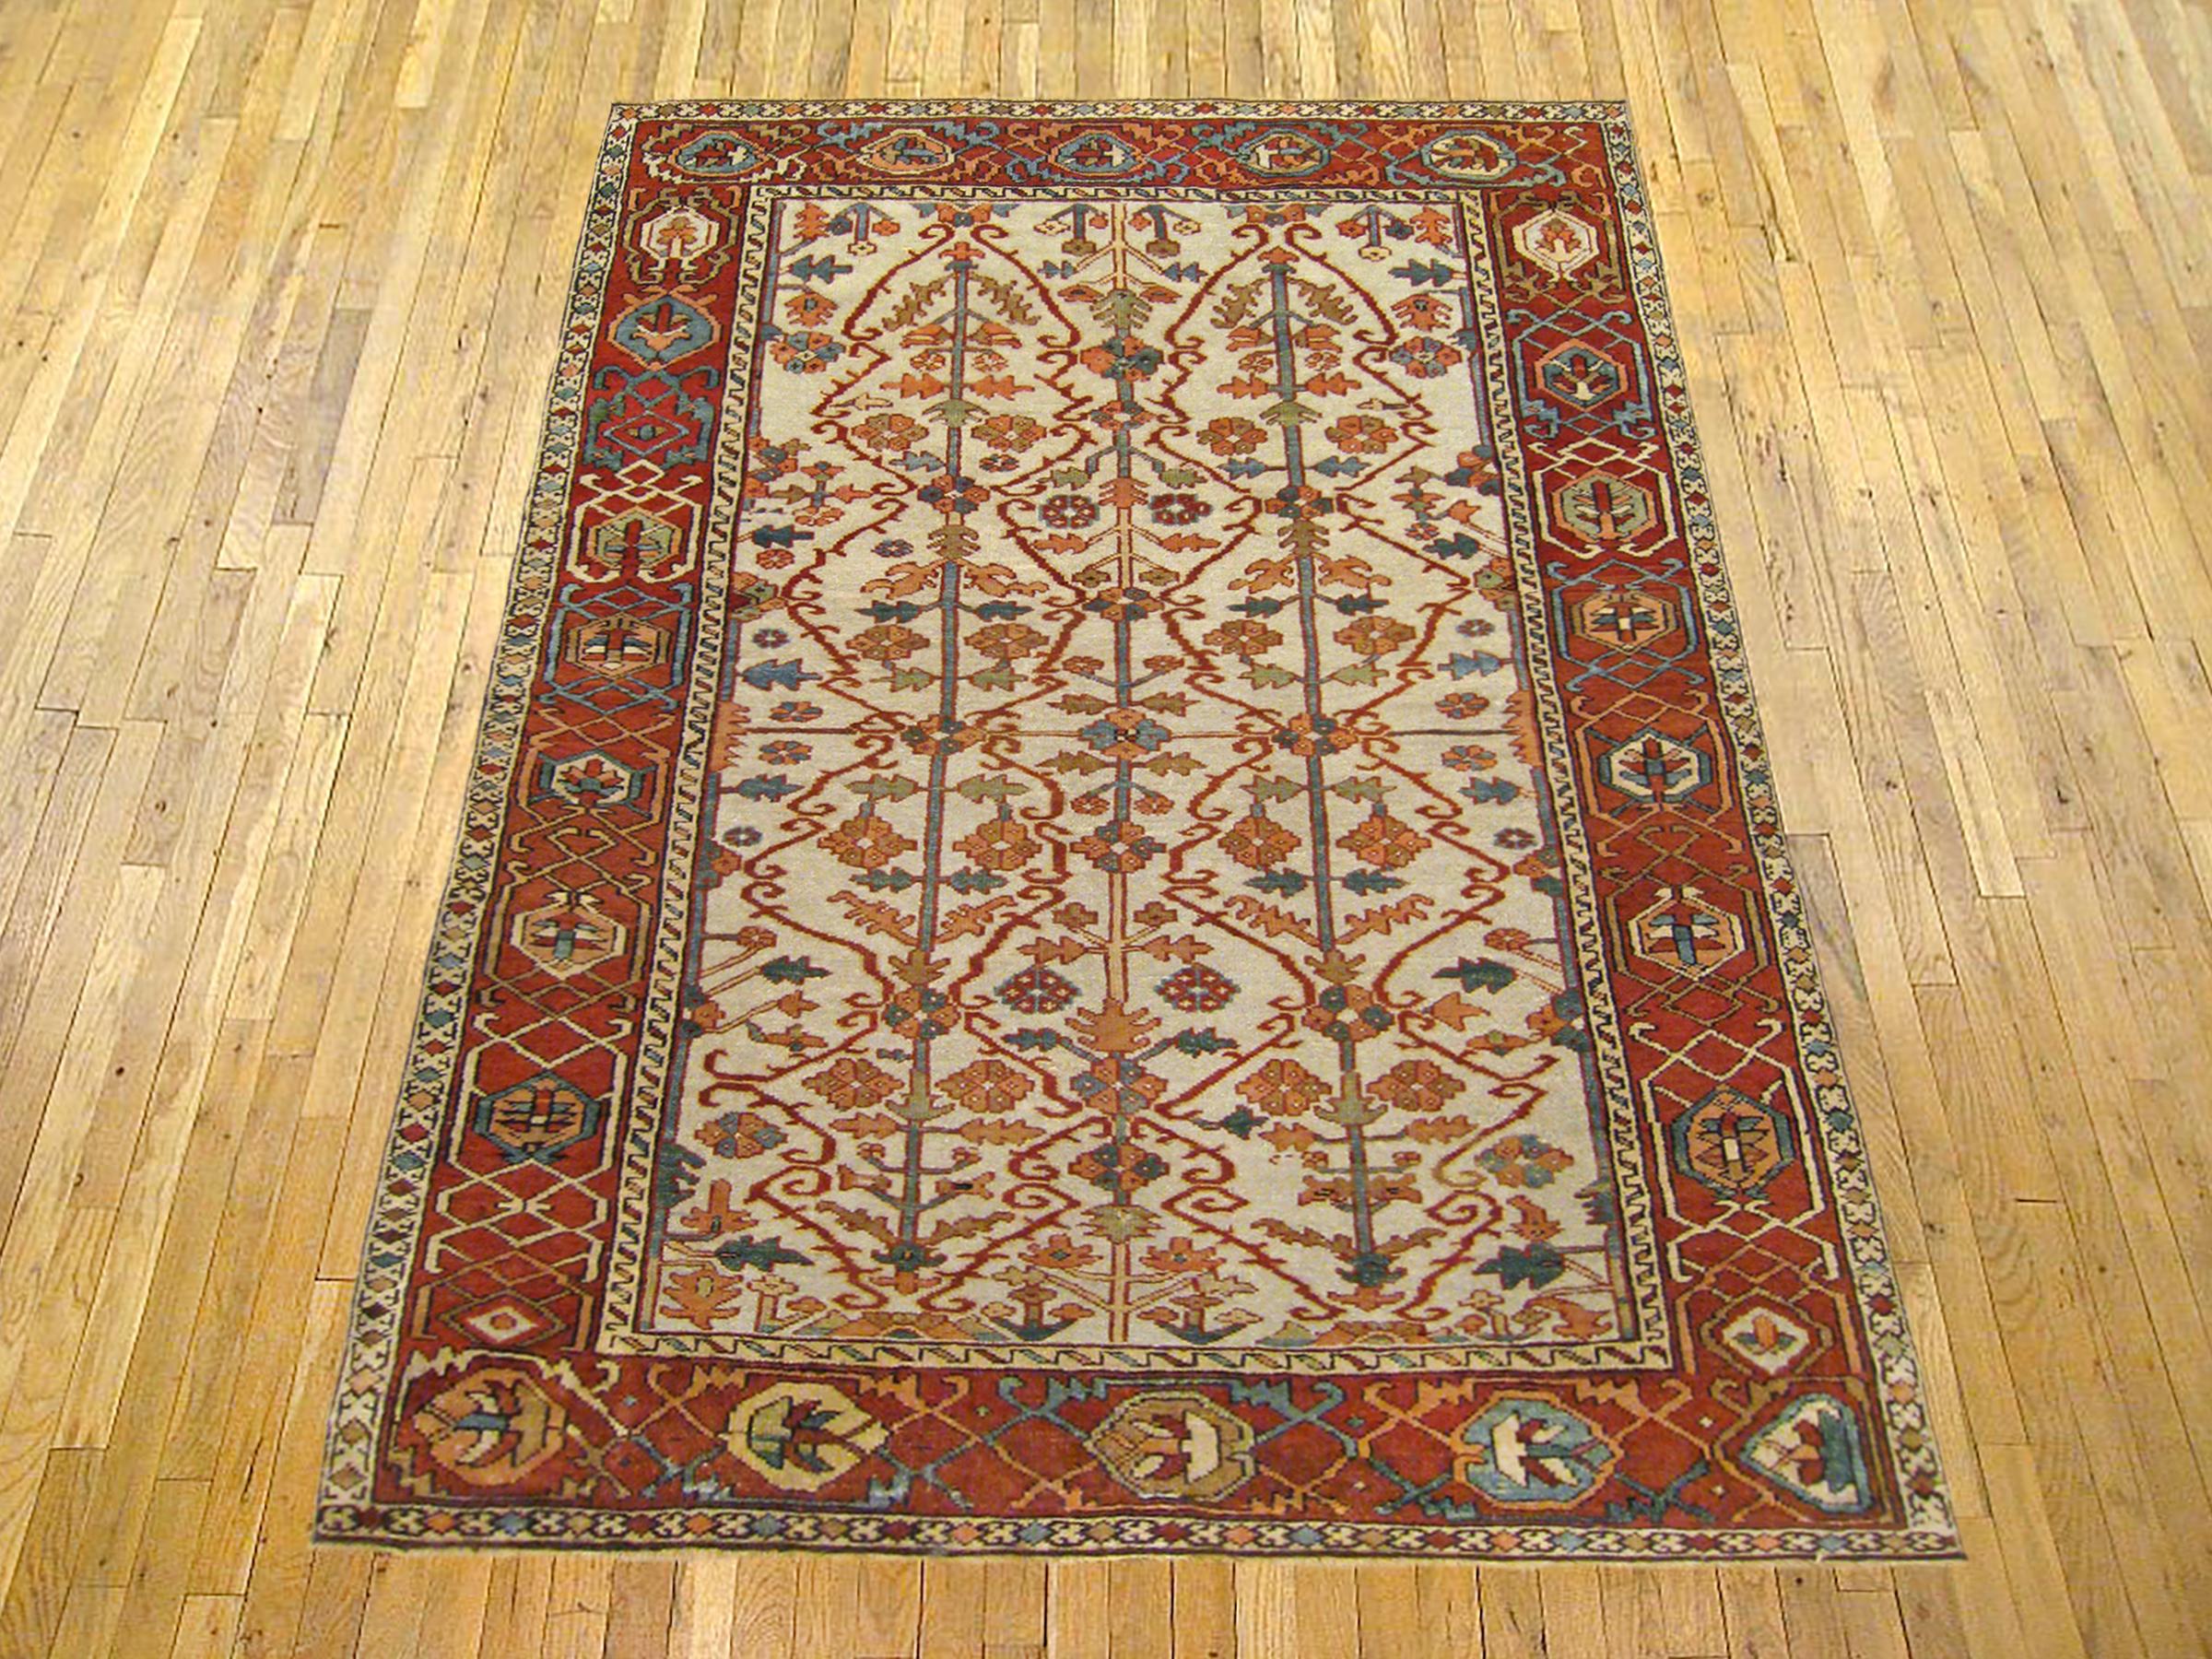 Antique Persian Serapi Oriental Rug, in Small size

An antique Persian Serapi oriental rug, size 6'0